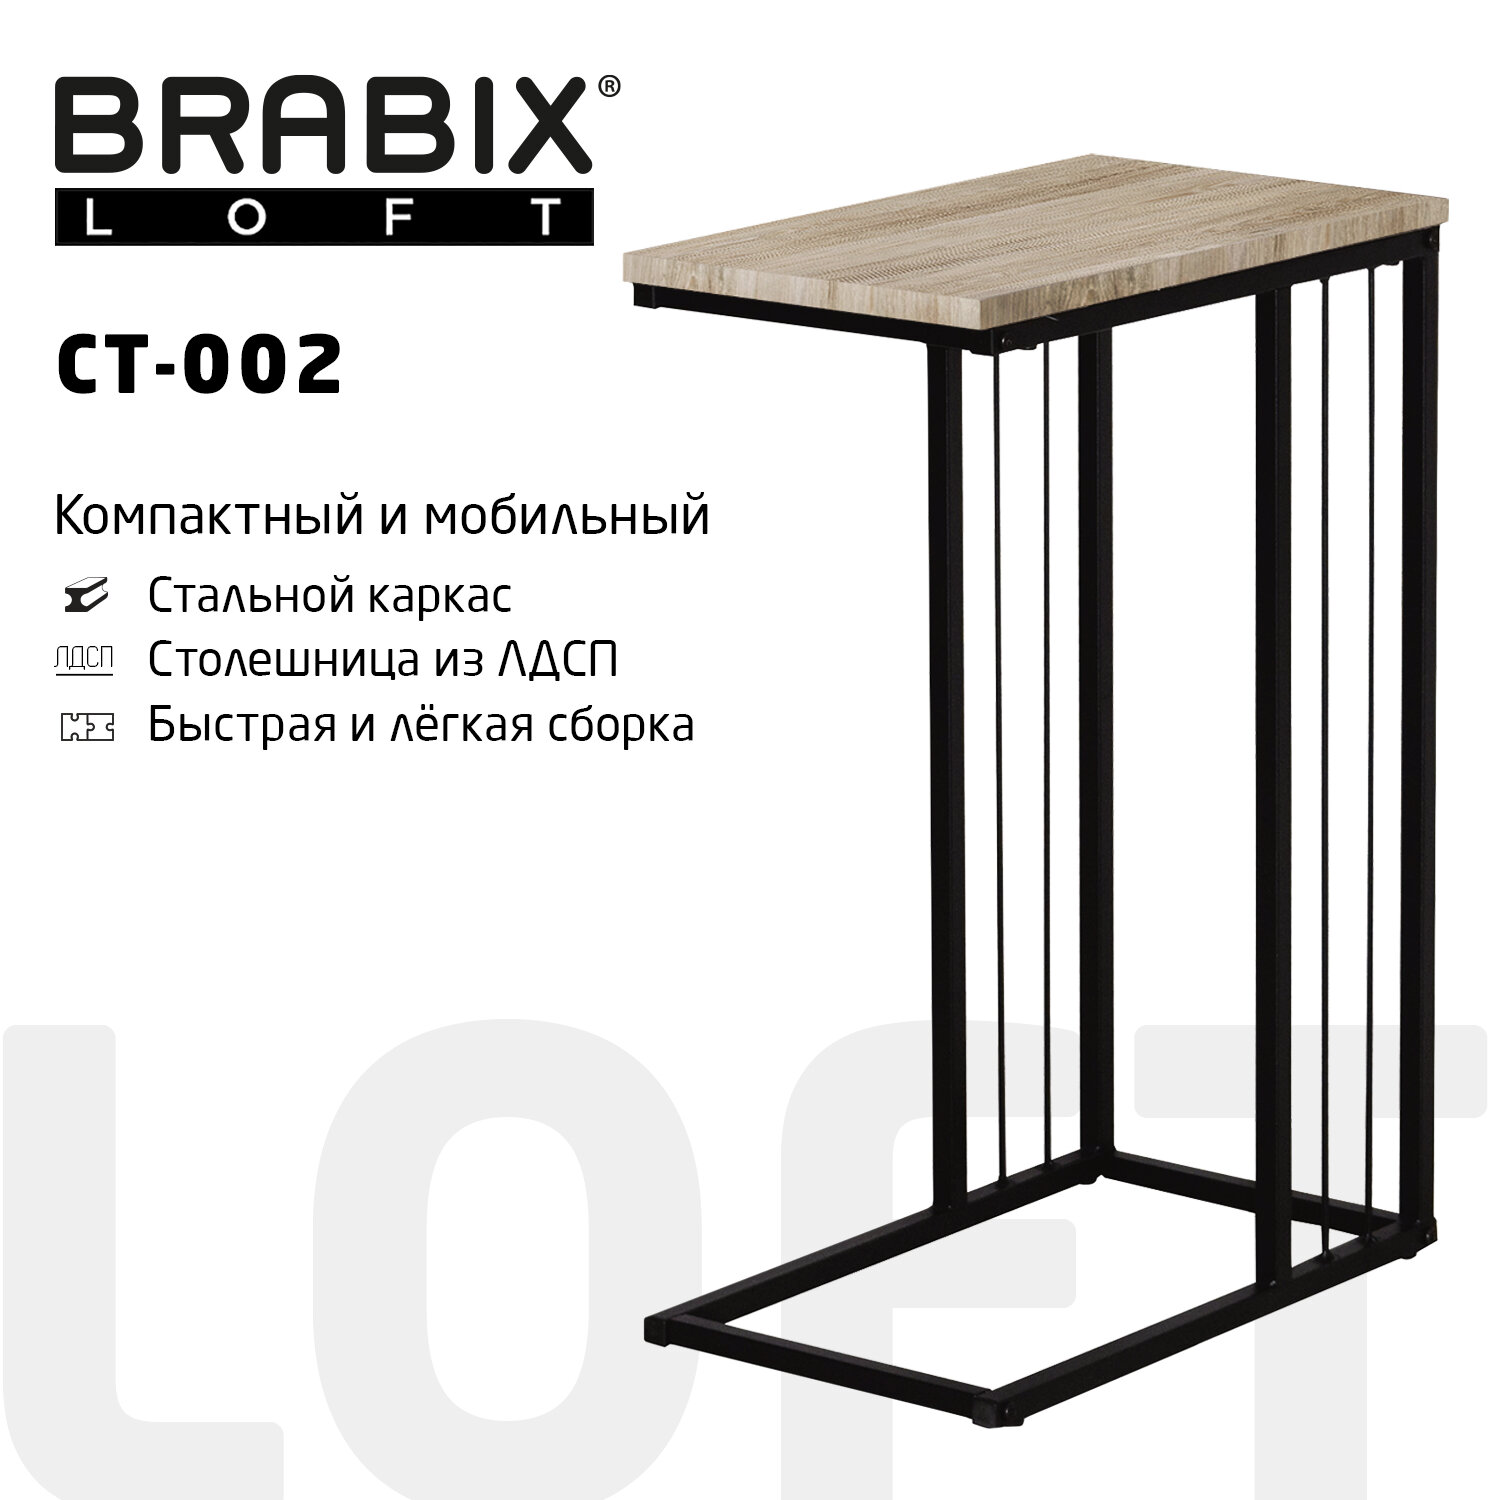 Brabix  BRABIX LOFT CT-002 641862